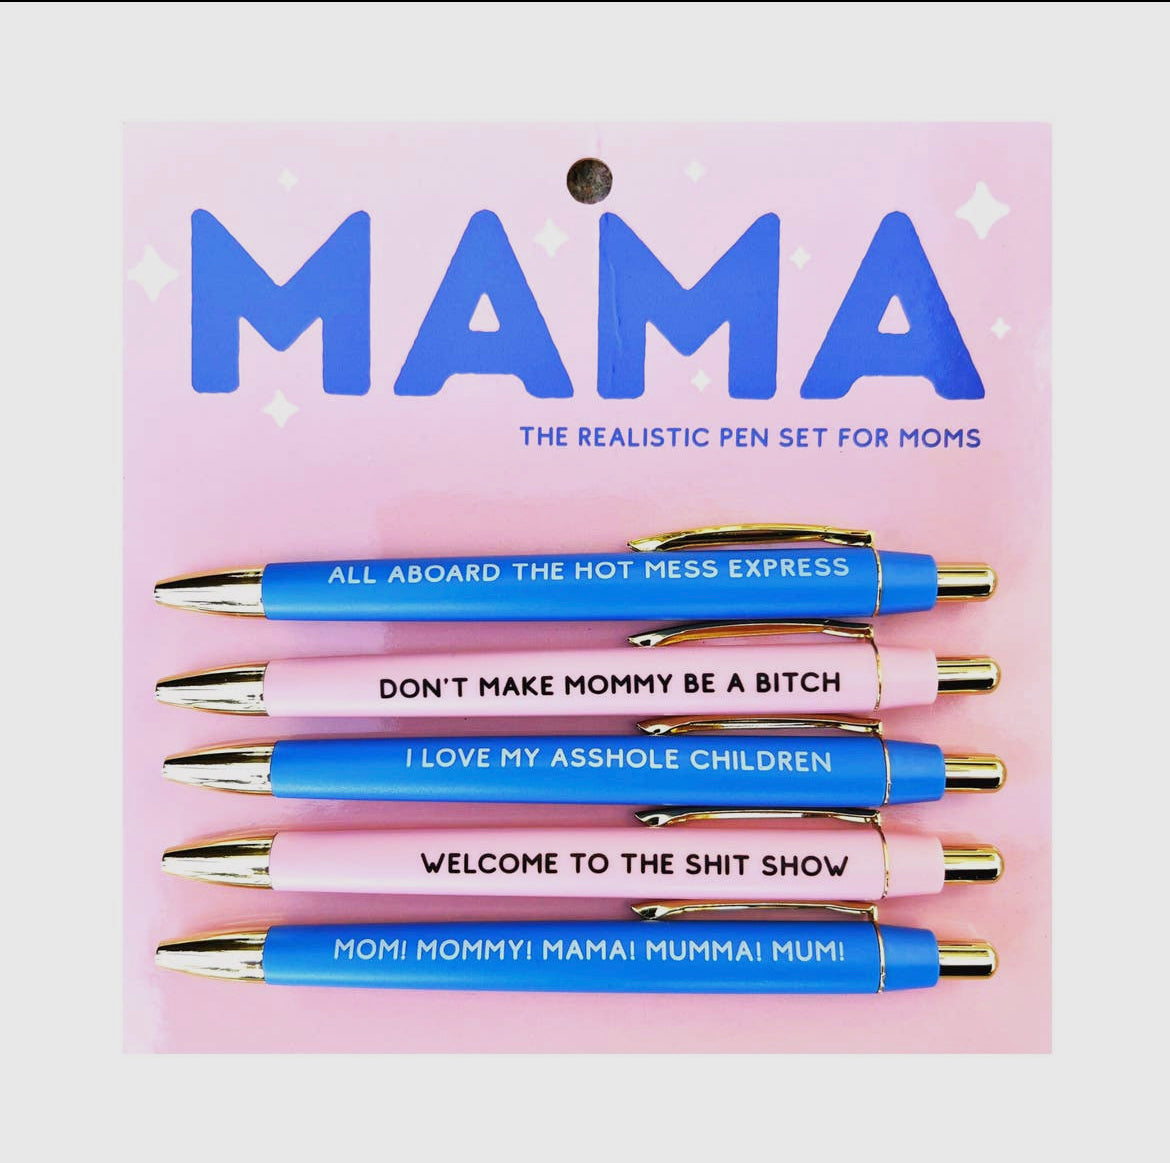 Mama (funny) Pen Set